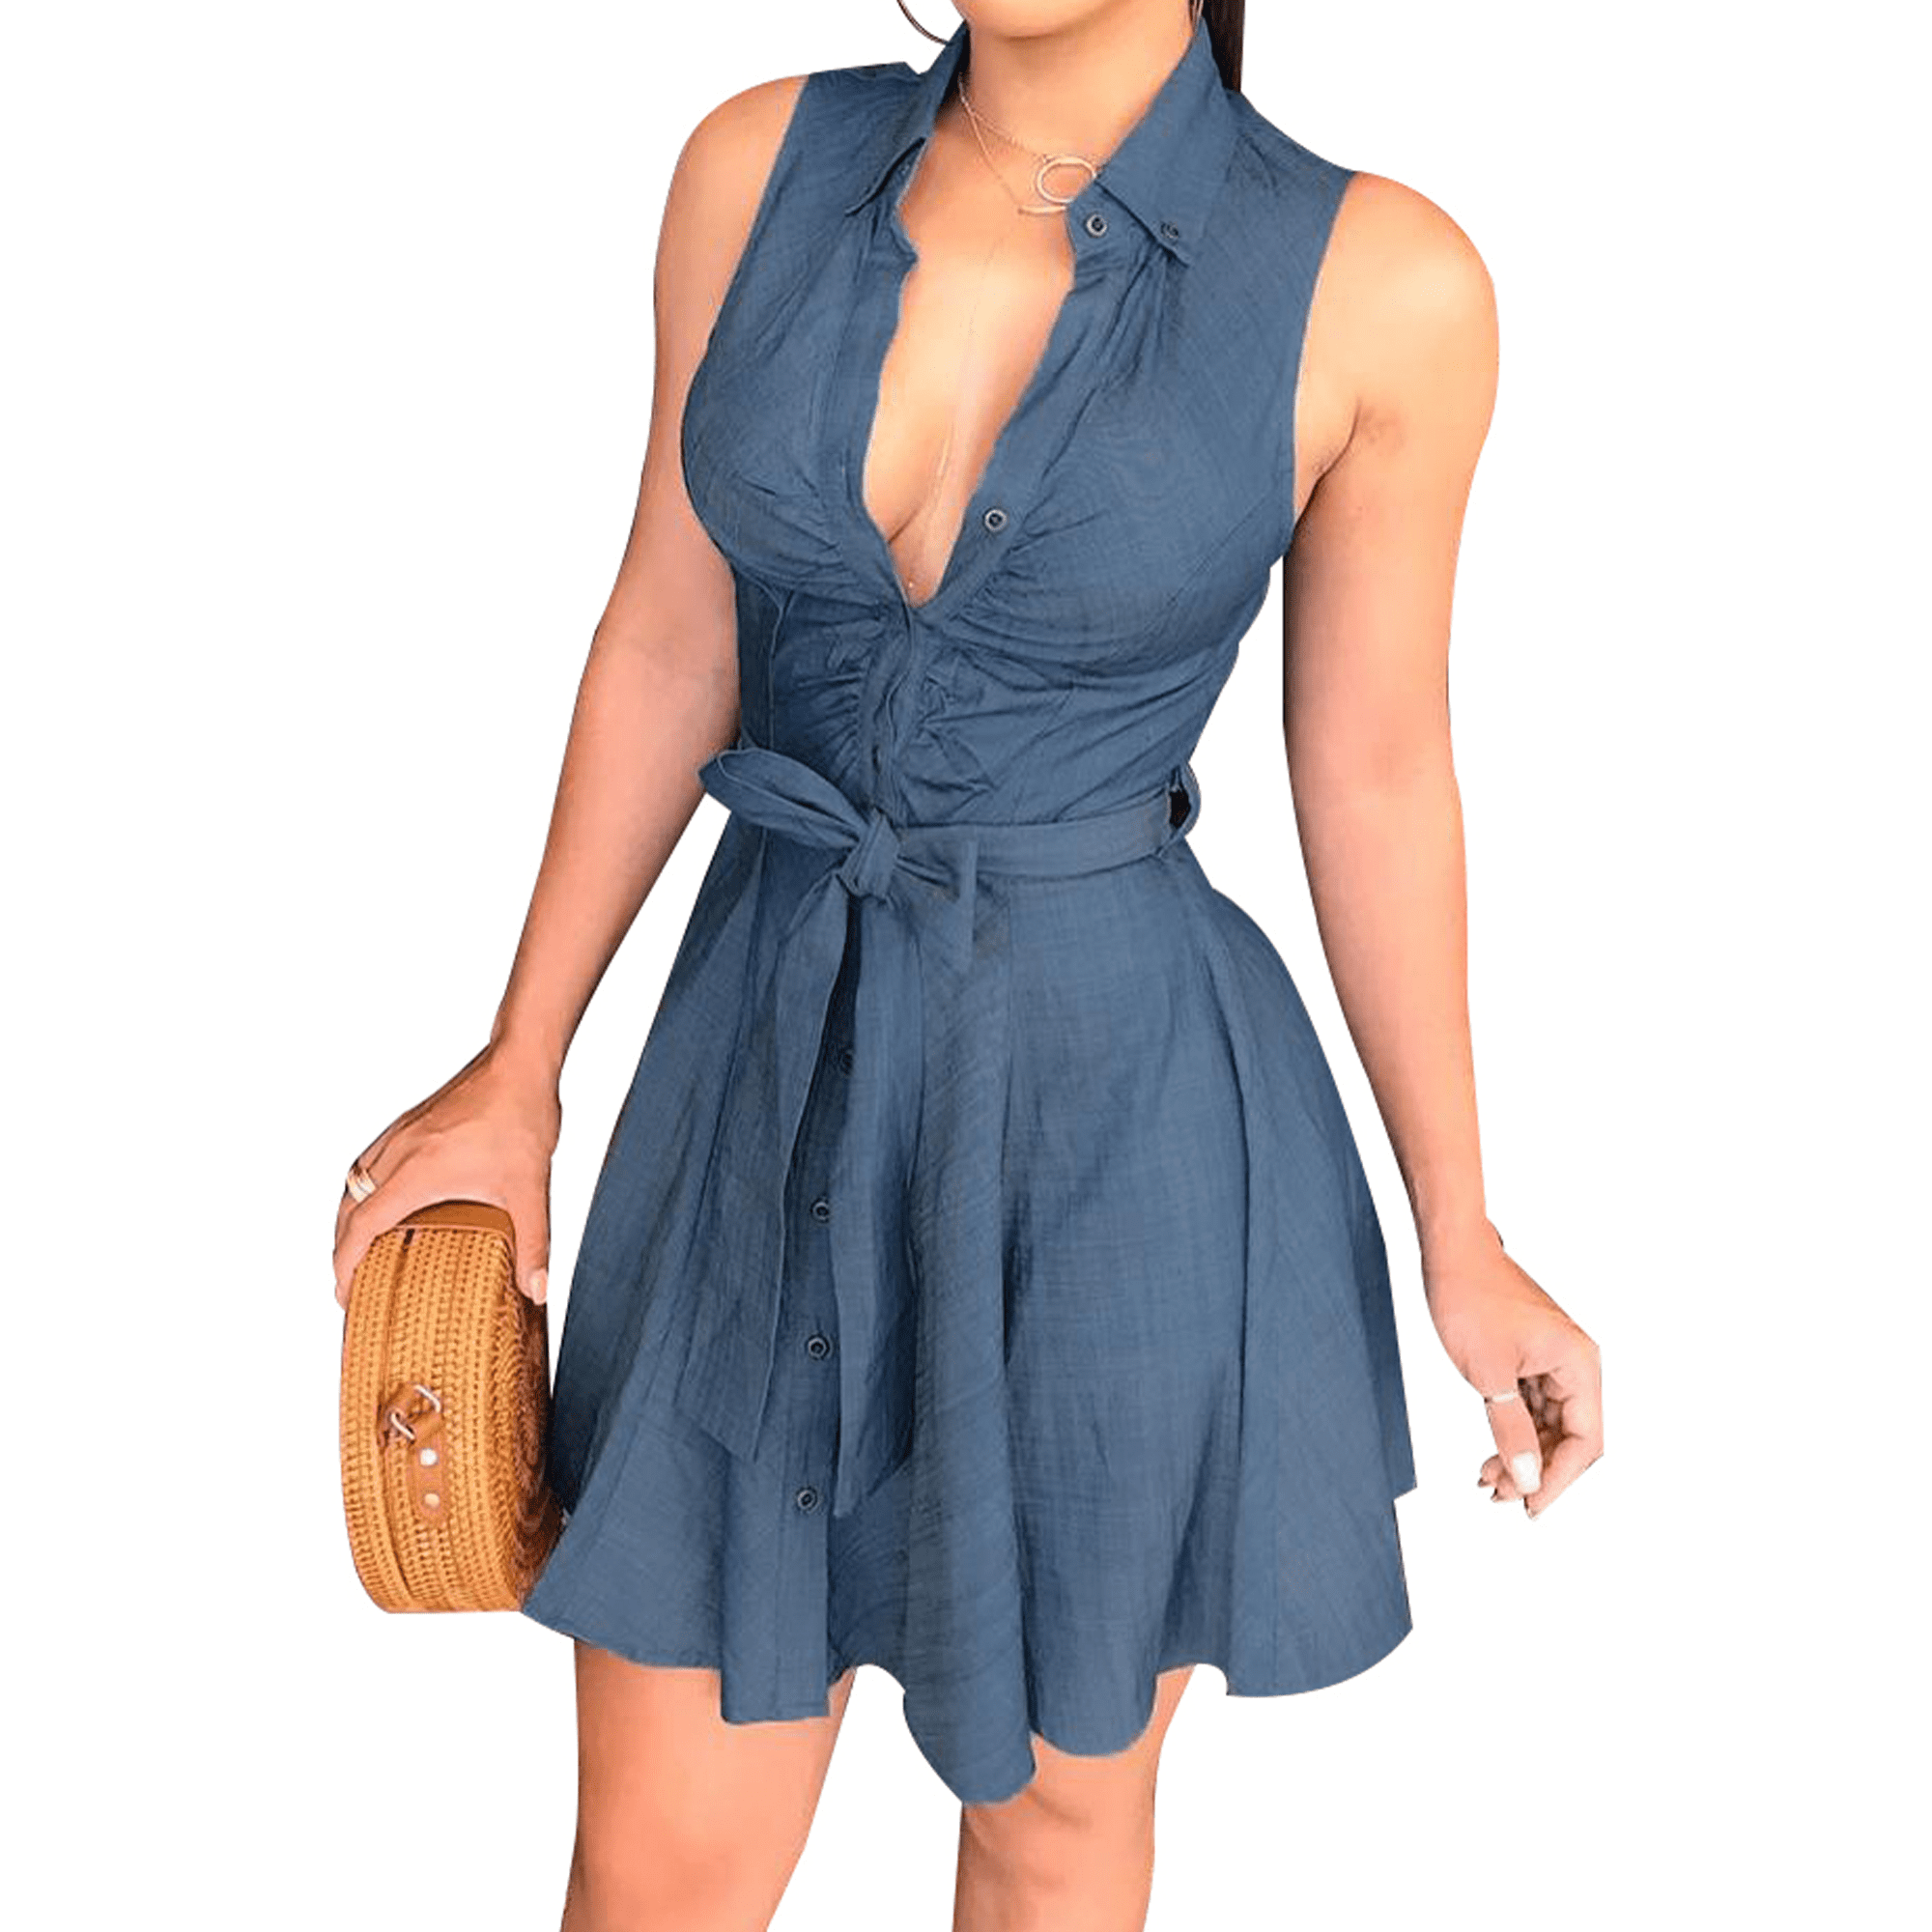 Women Sleeveless Denim Blue Dress Belted Party Cocktail Short Mini